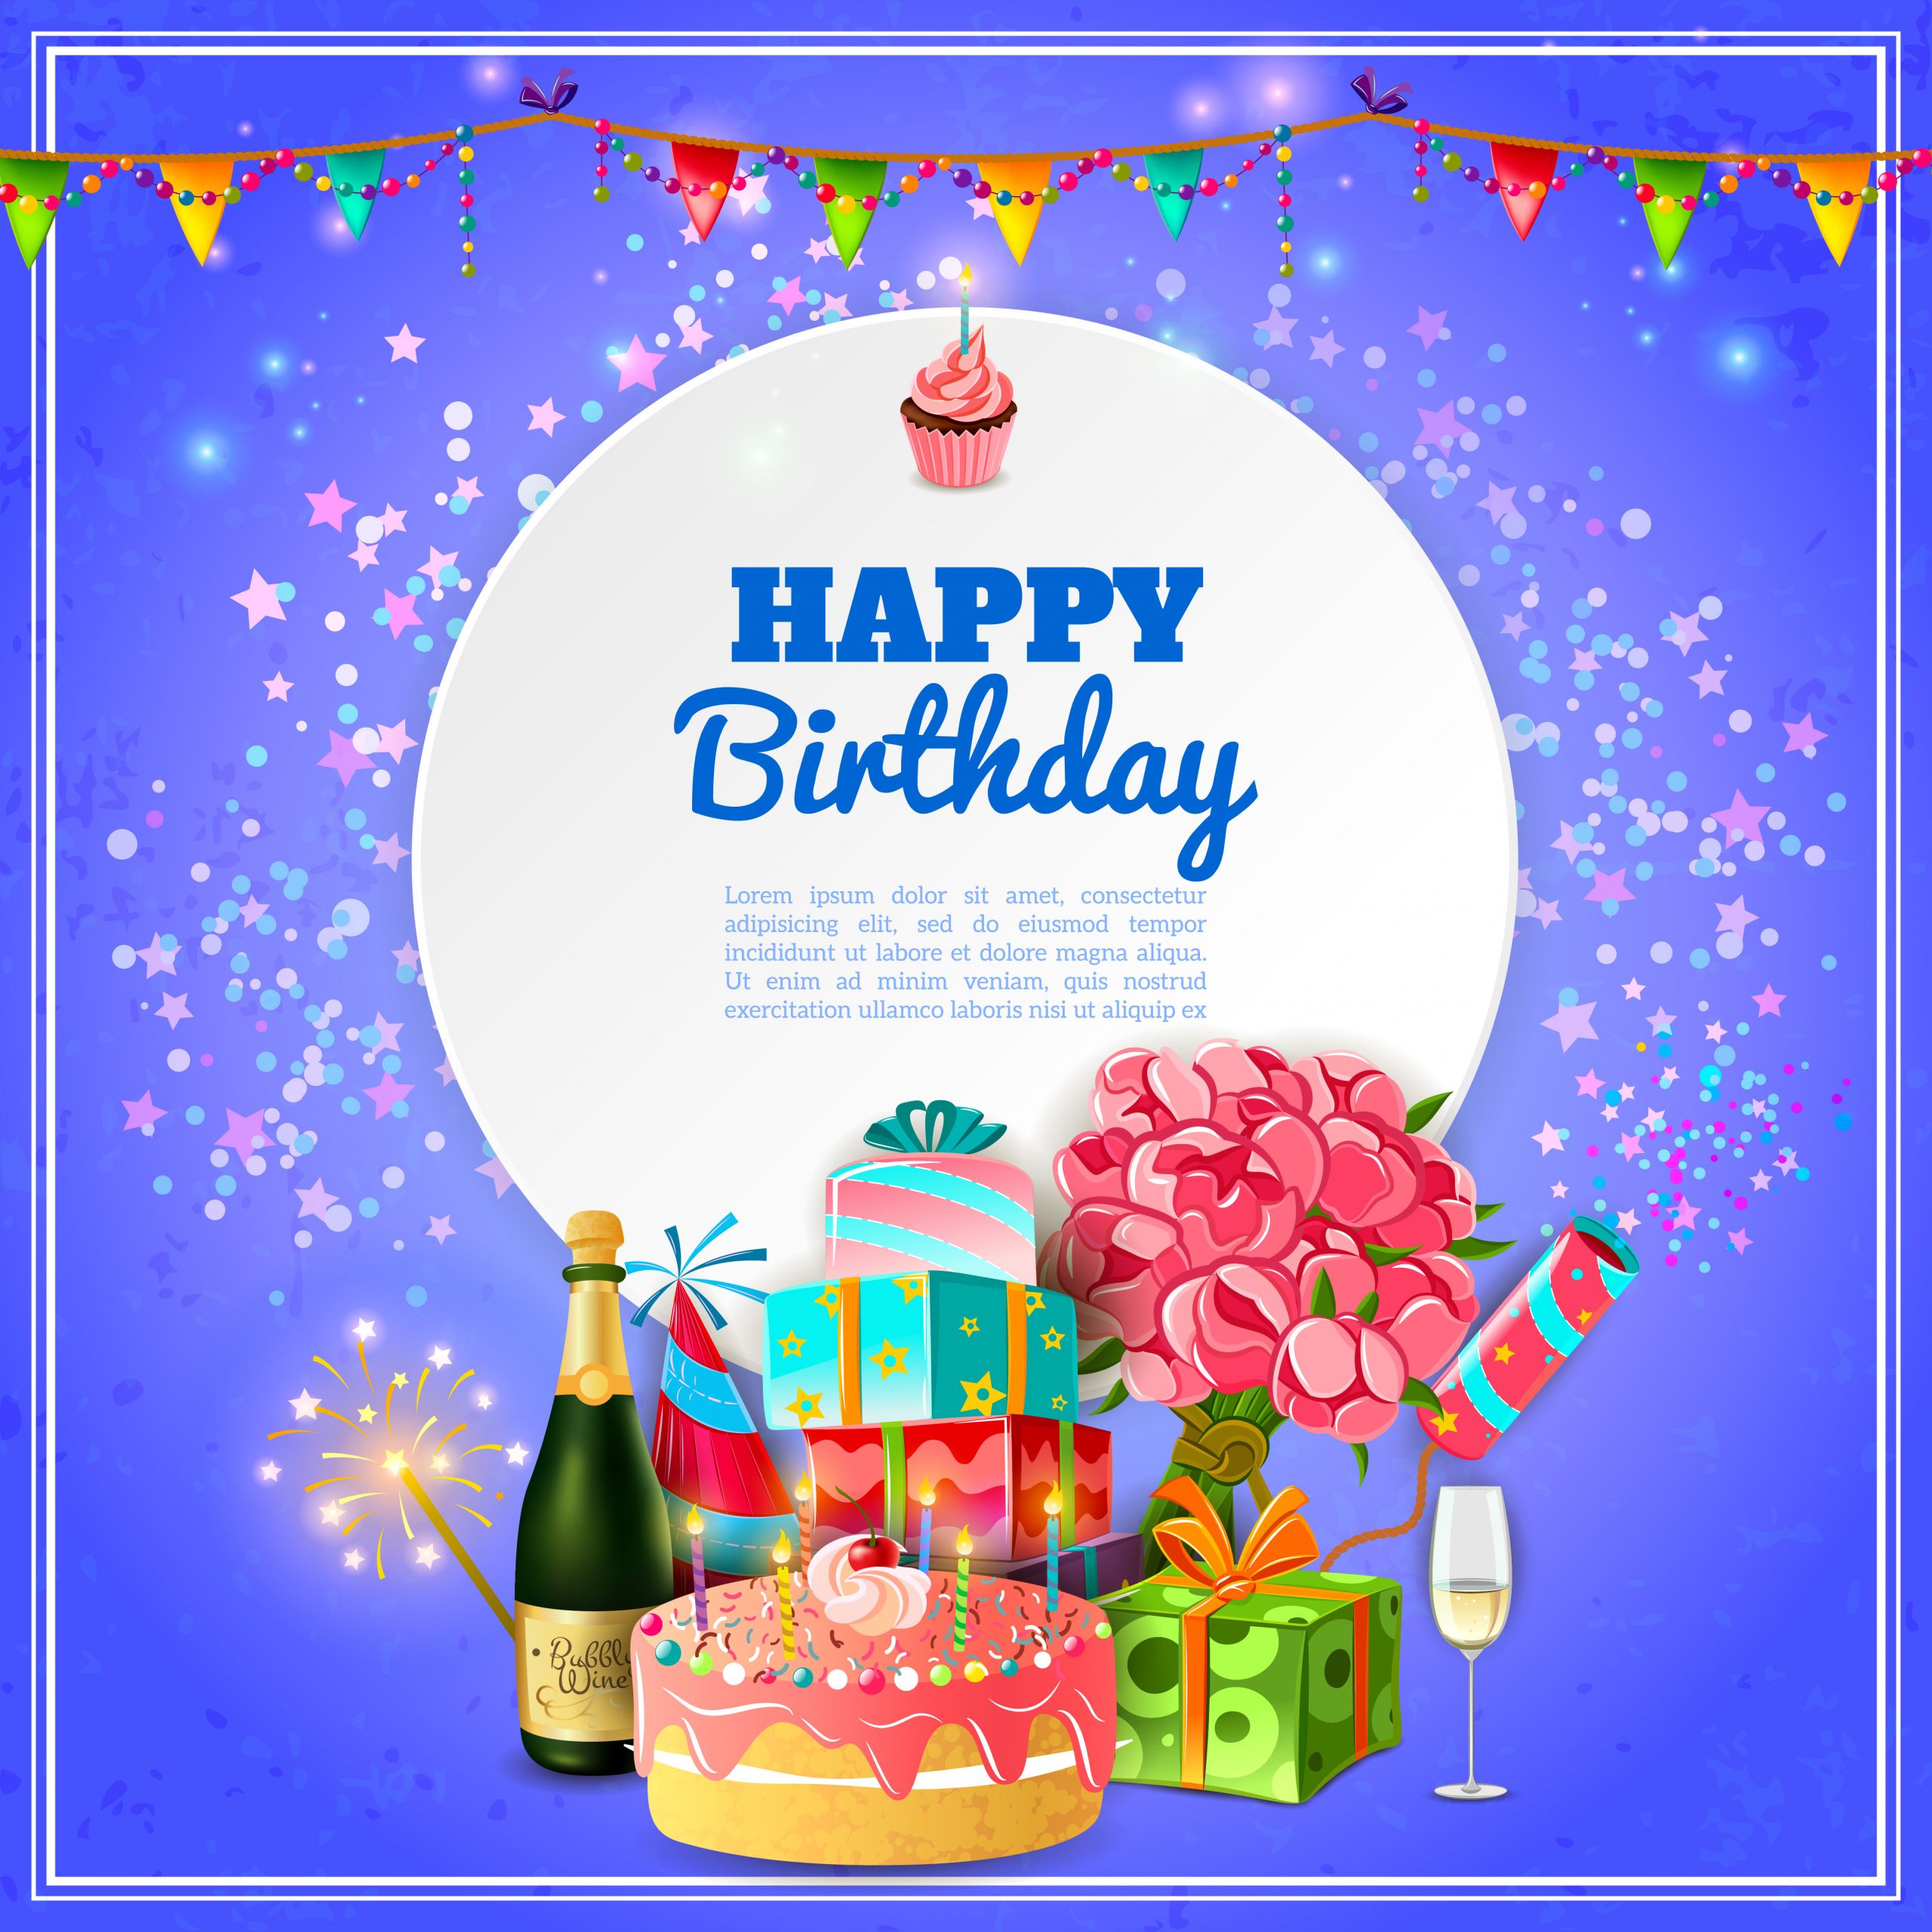 Happy Birthday Party
 Happy birthday party background poster Download Free